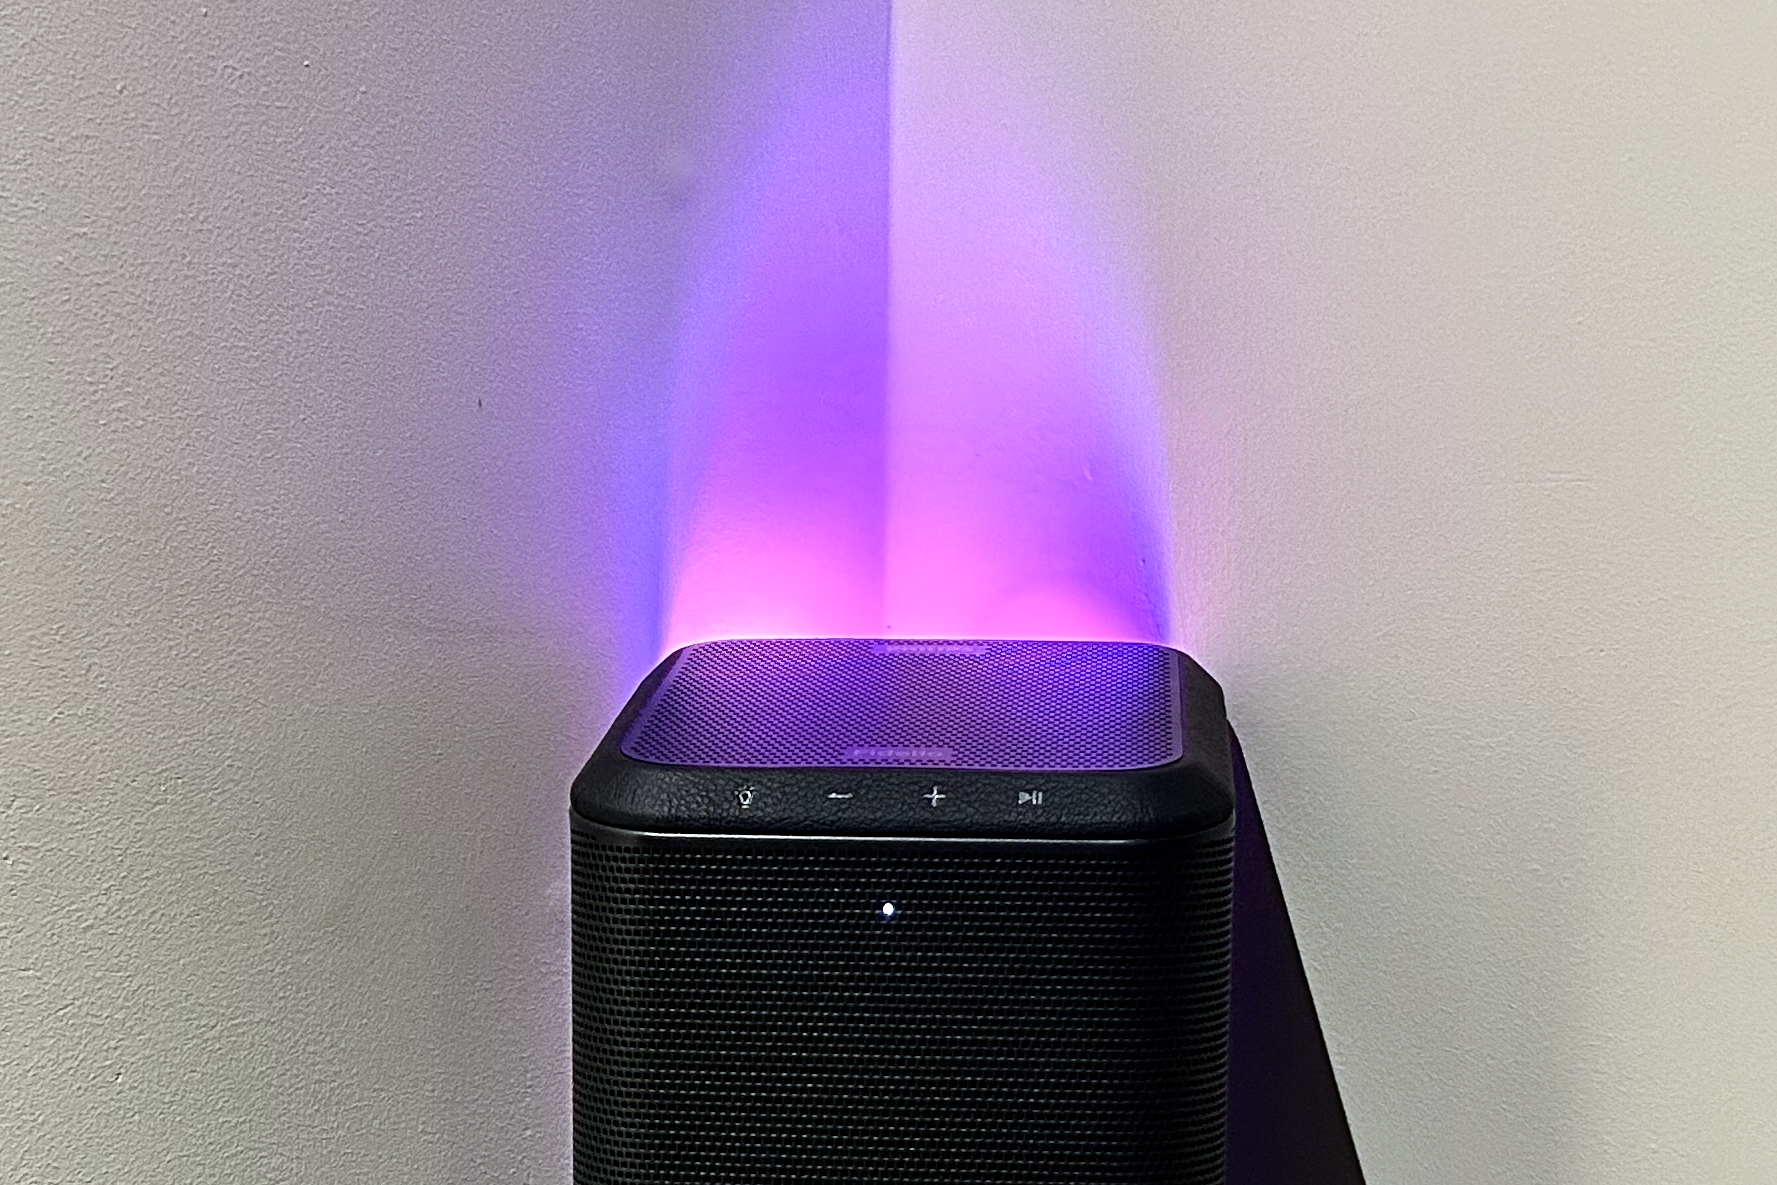 Philips Fidelio FS1 wireless speaker with glowing LED lights.